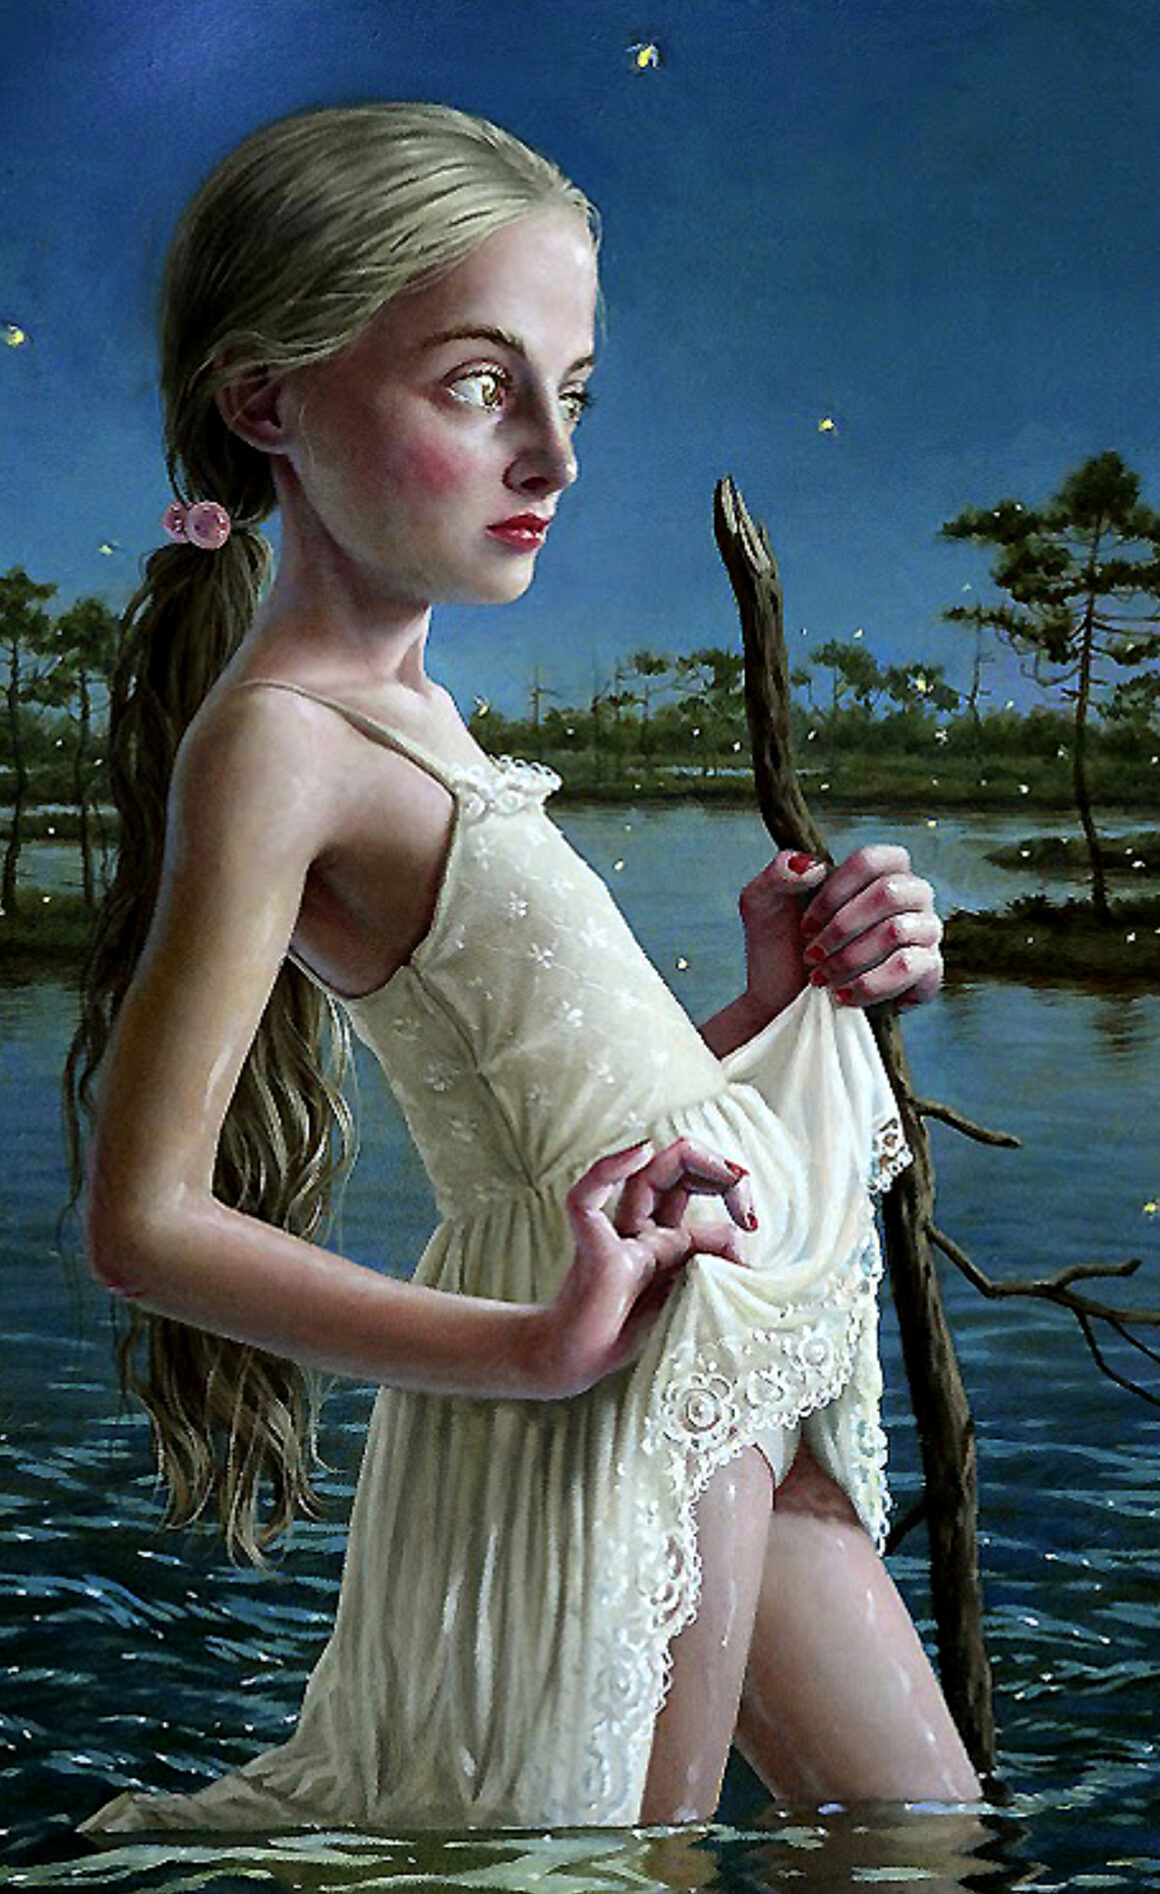 Painting by artist Jana Brike